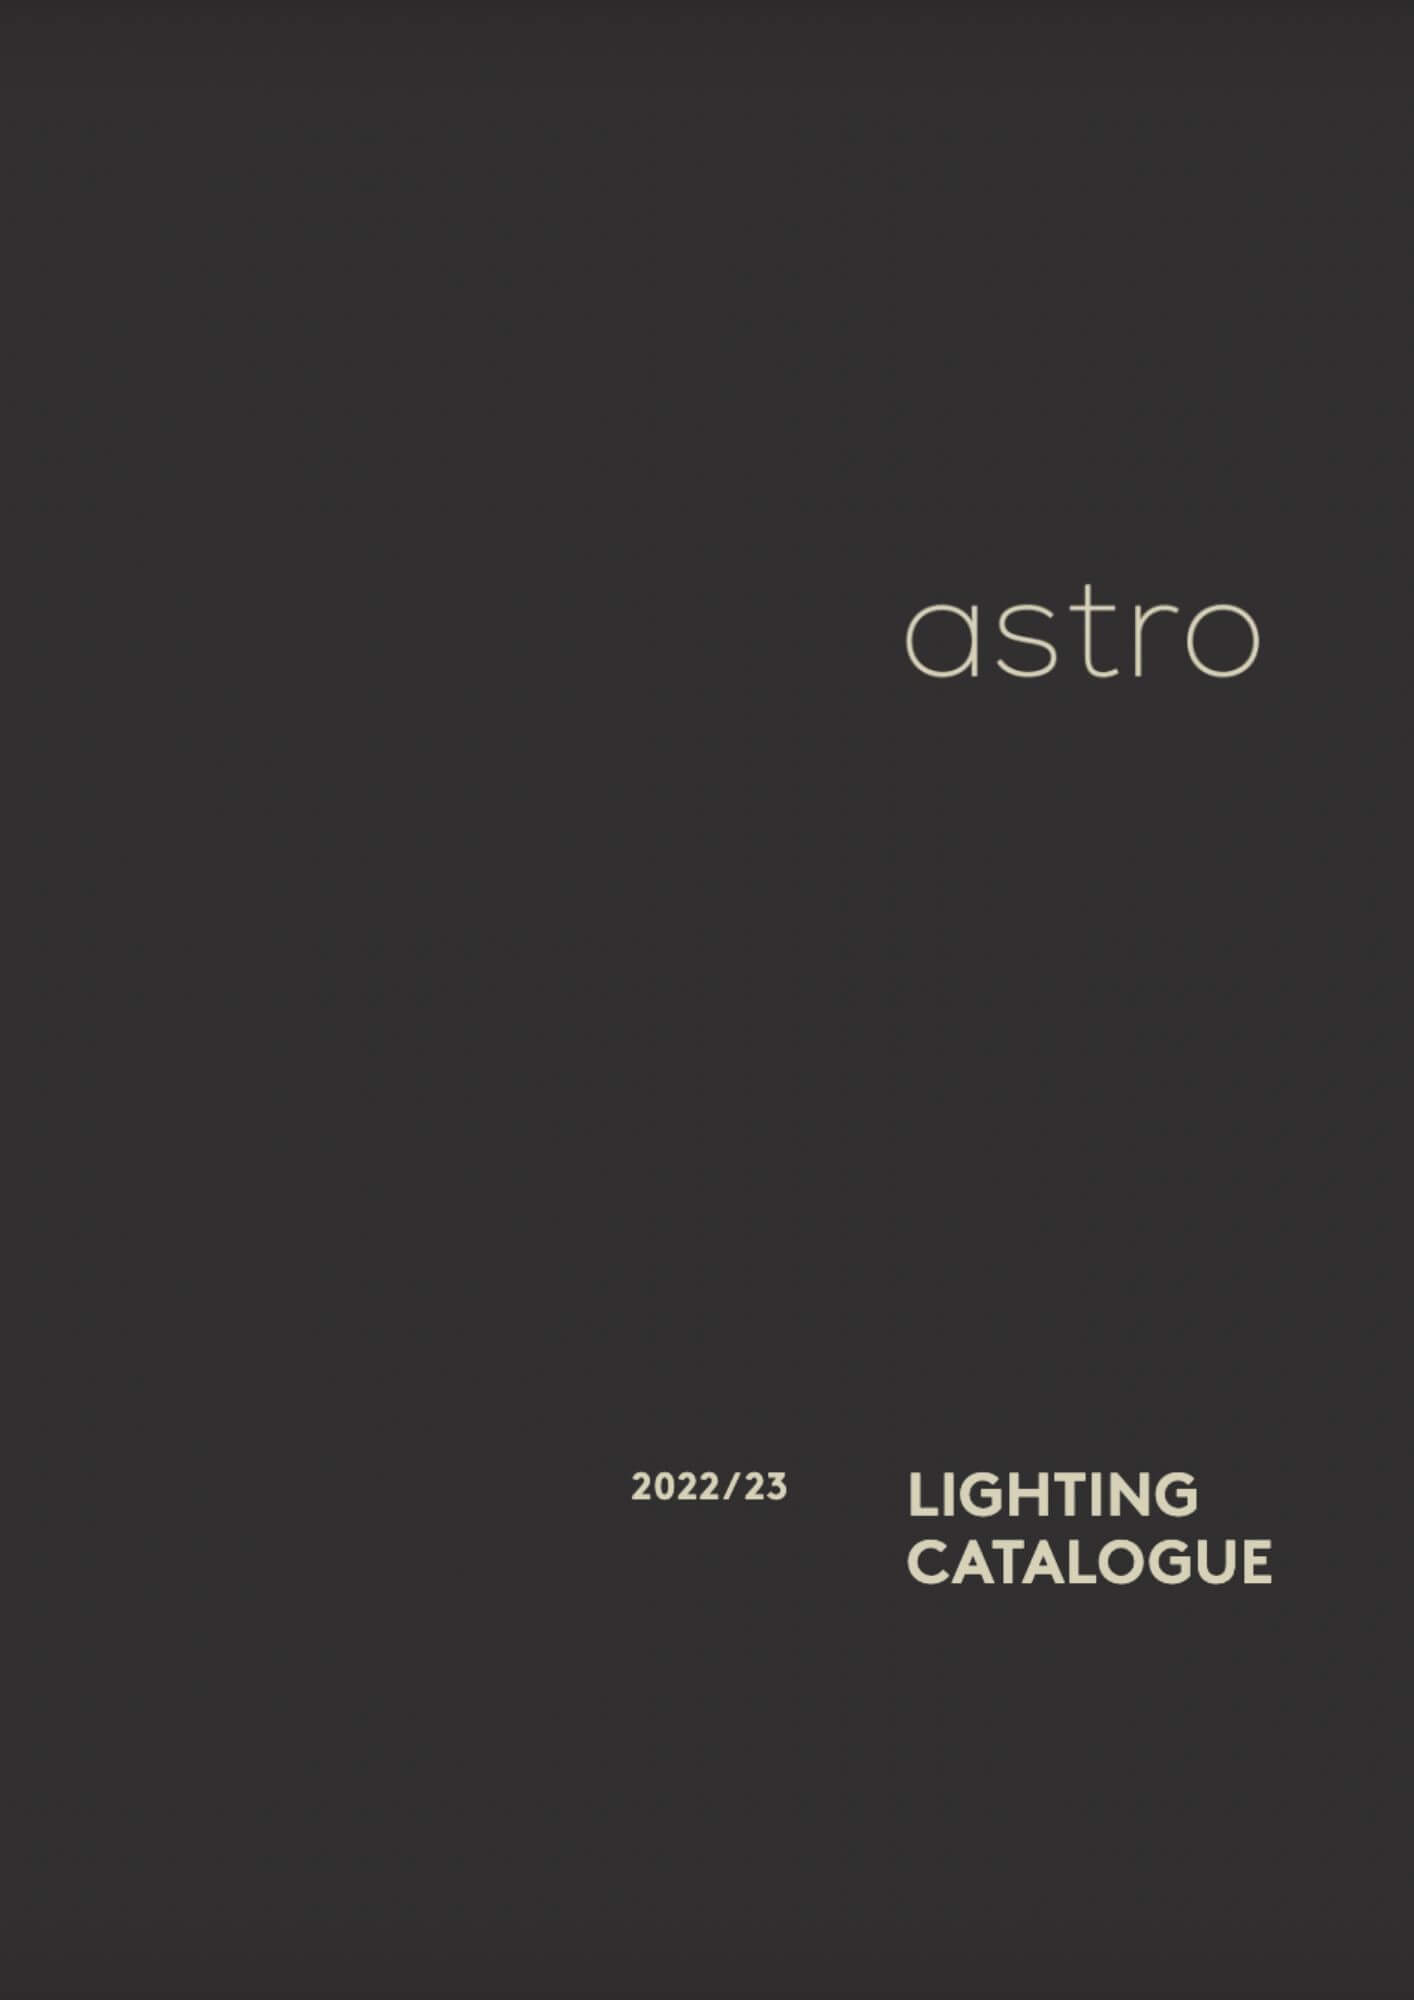 Astro Lighting Catalog 2022/2023